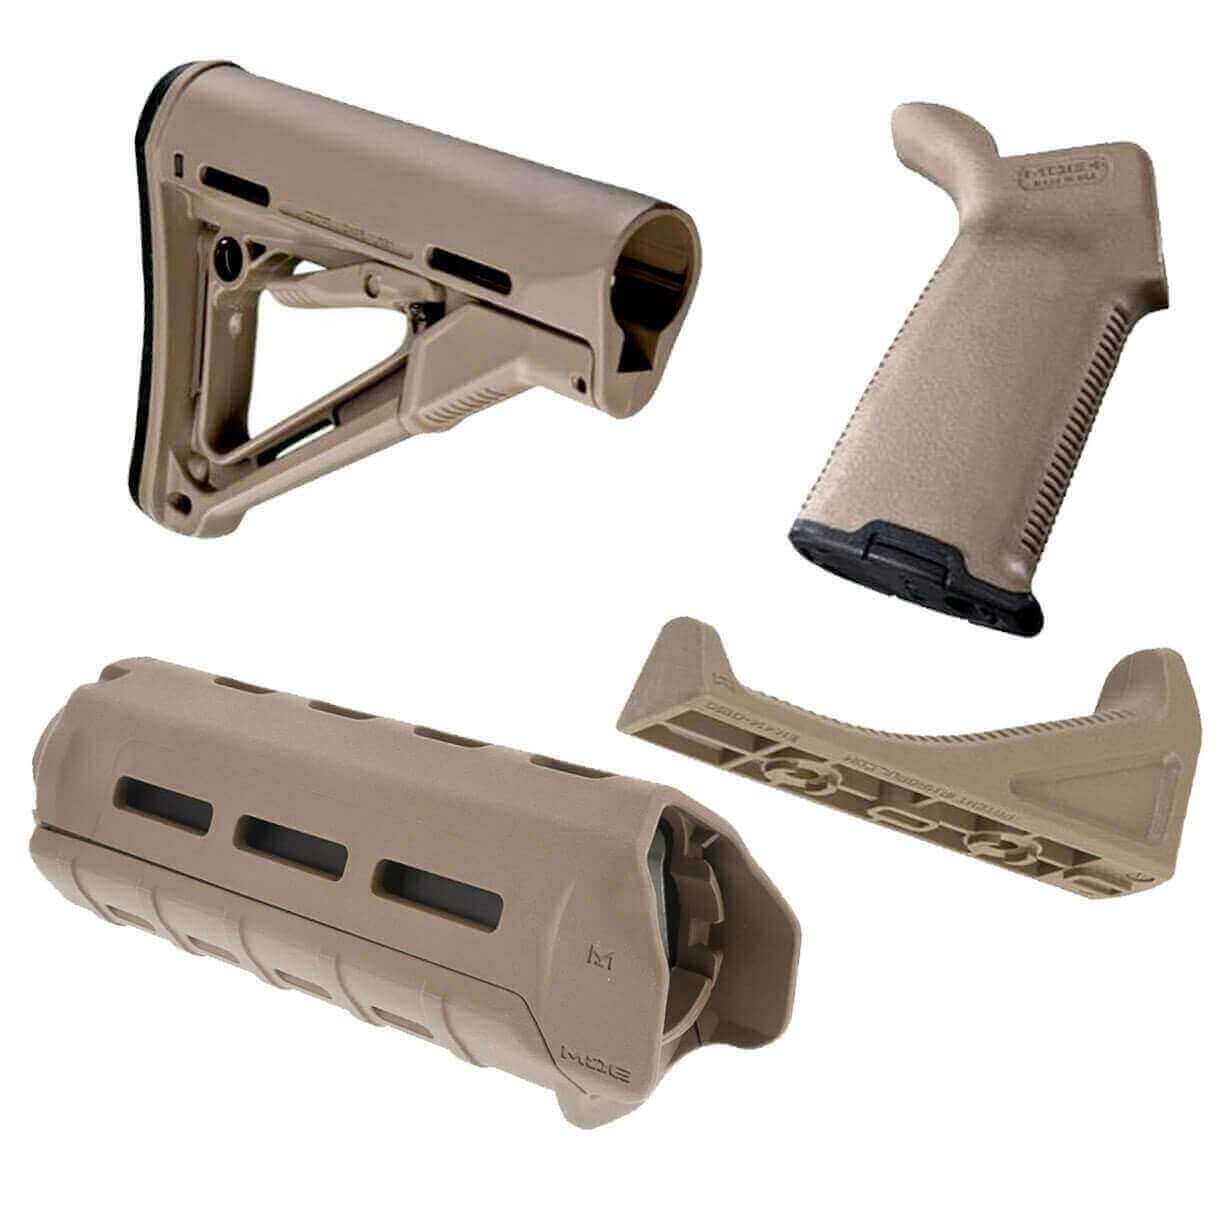 Magpul CTR Stock Kit | Furniture Kit for AR-15– CTR Stock, MOE+ Grip &a...